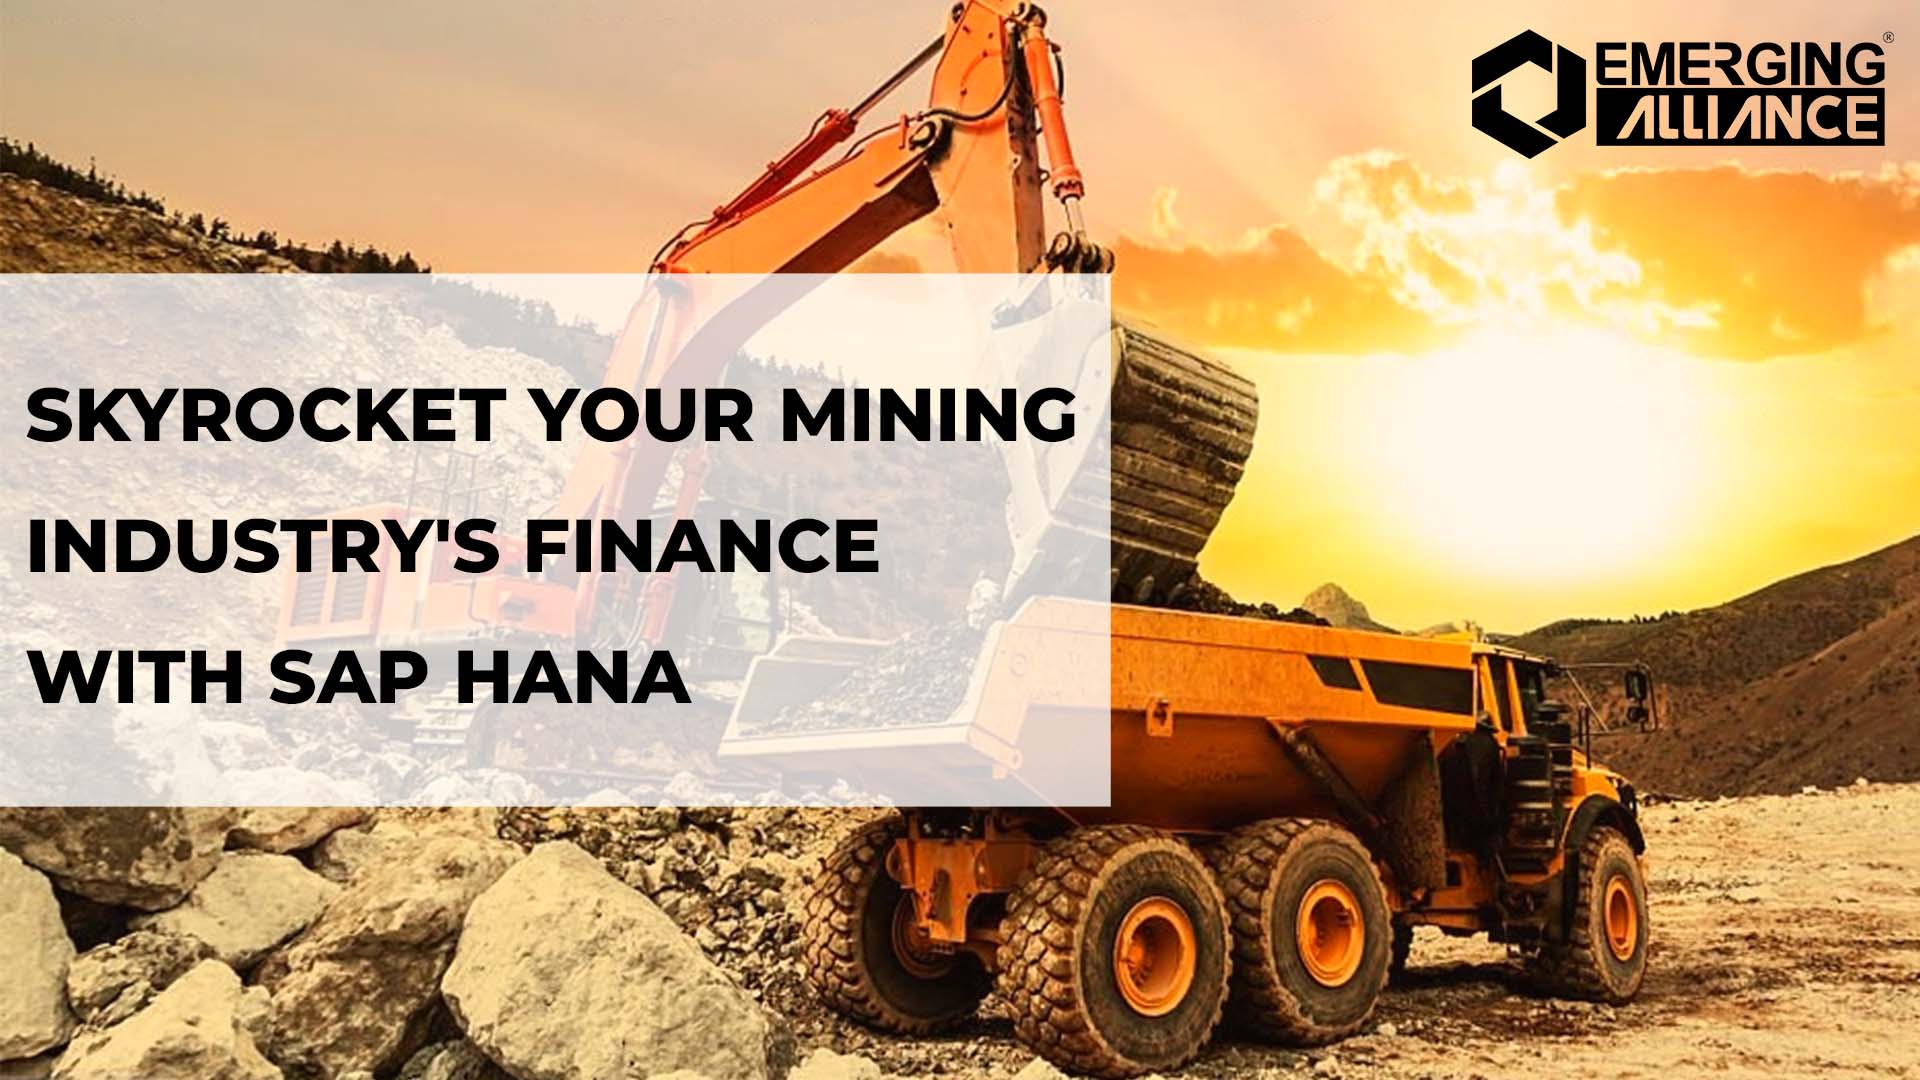 SAP HANA for Mining Industry